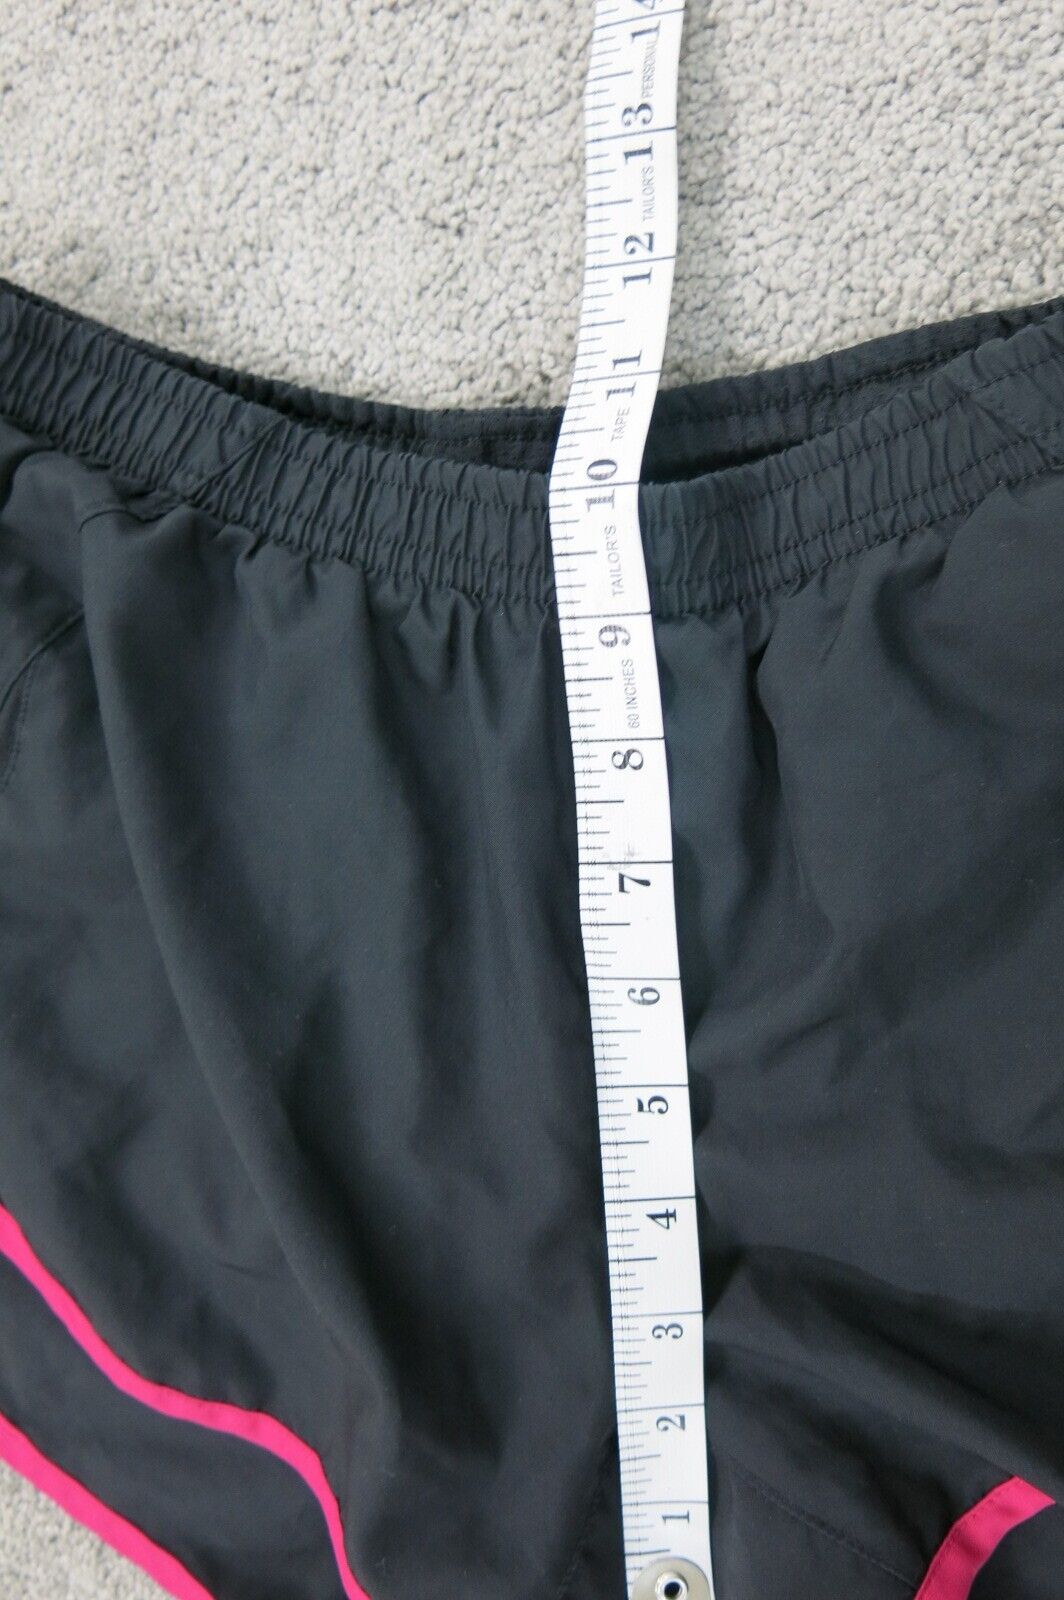 Nike Womens Athletic Running Shorts Elastic Waist Pull On Black Size Small